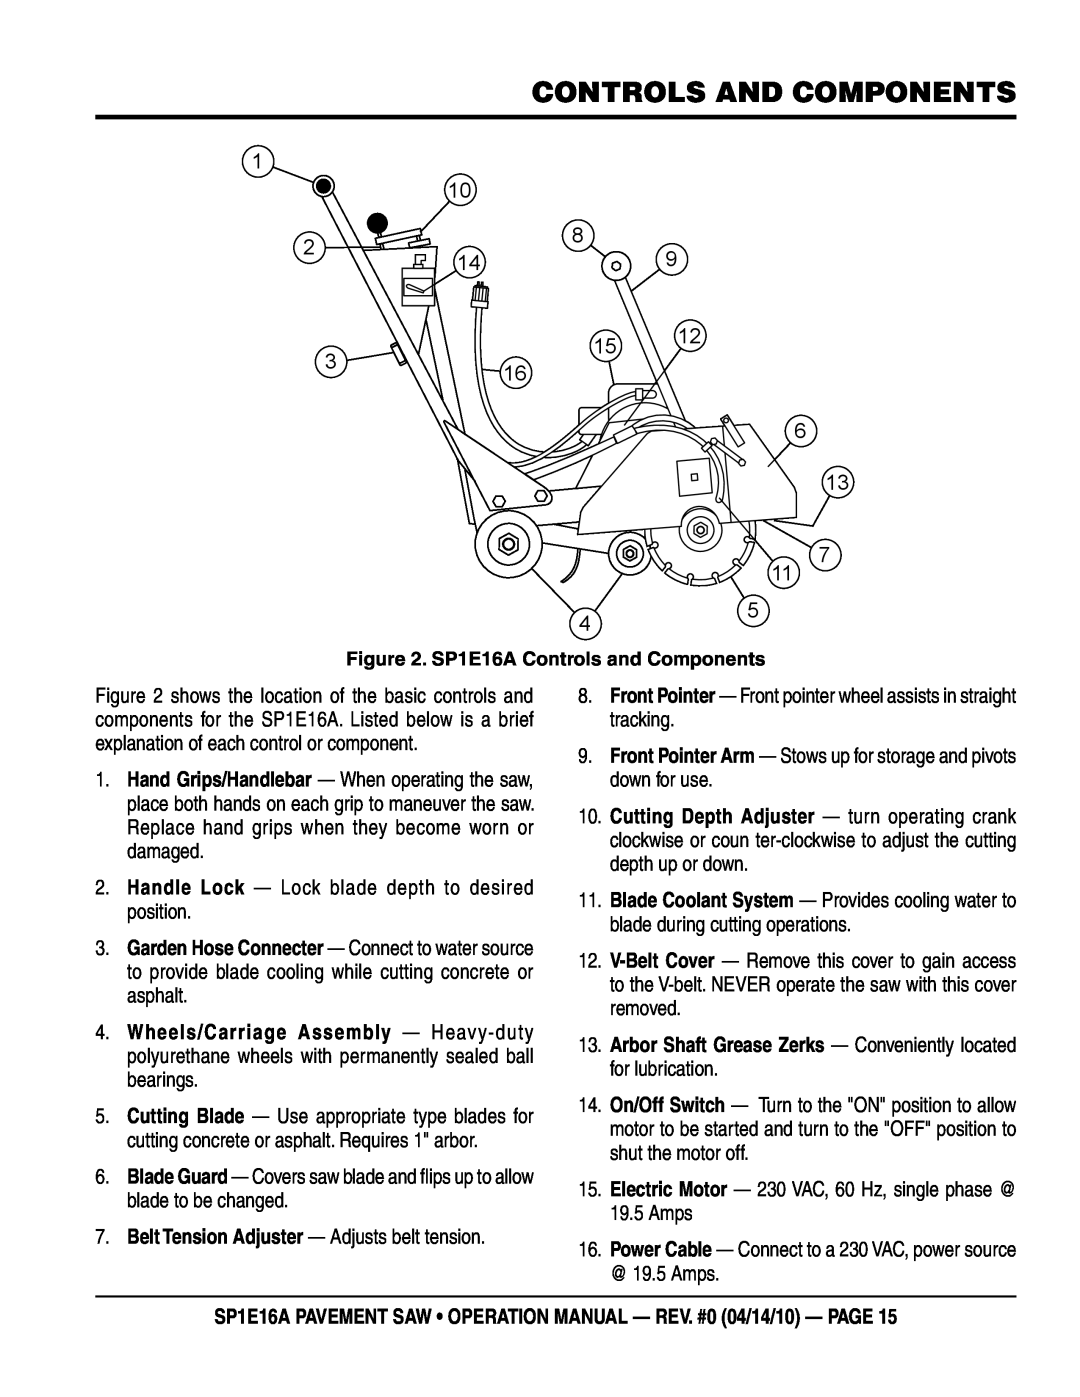 Multiquip SP1E16A operation manual controls and components 